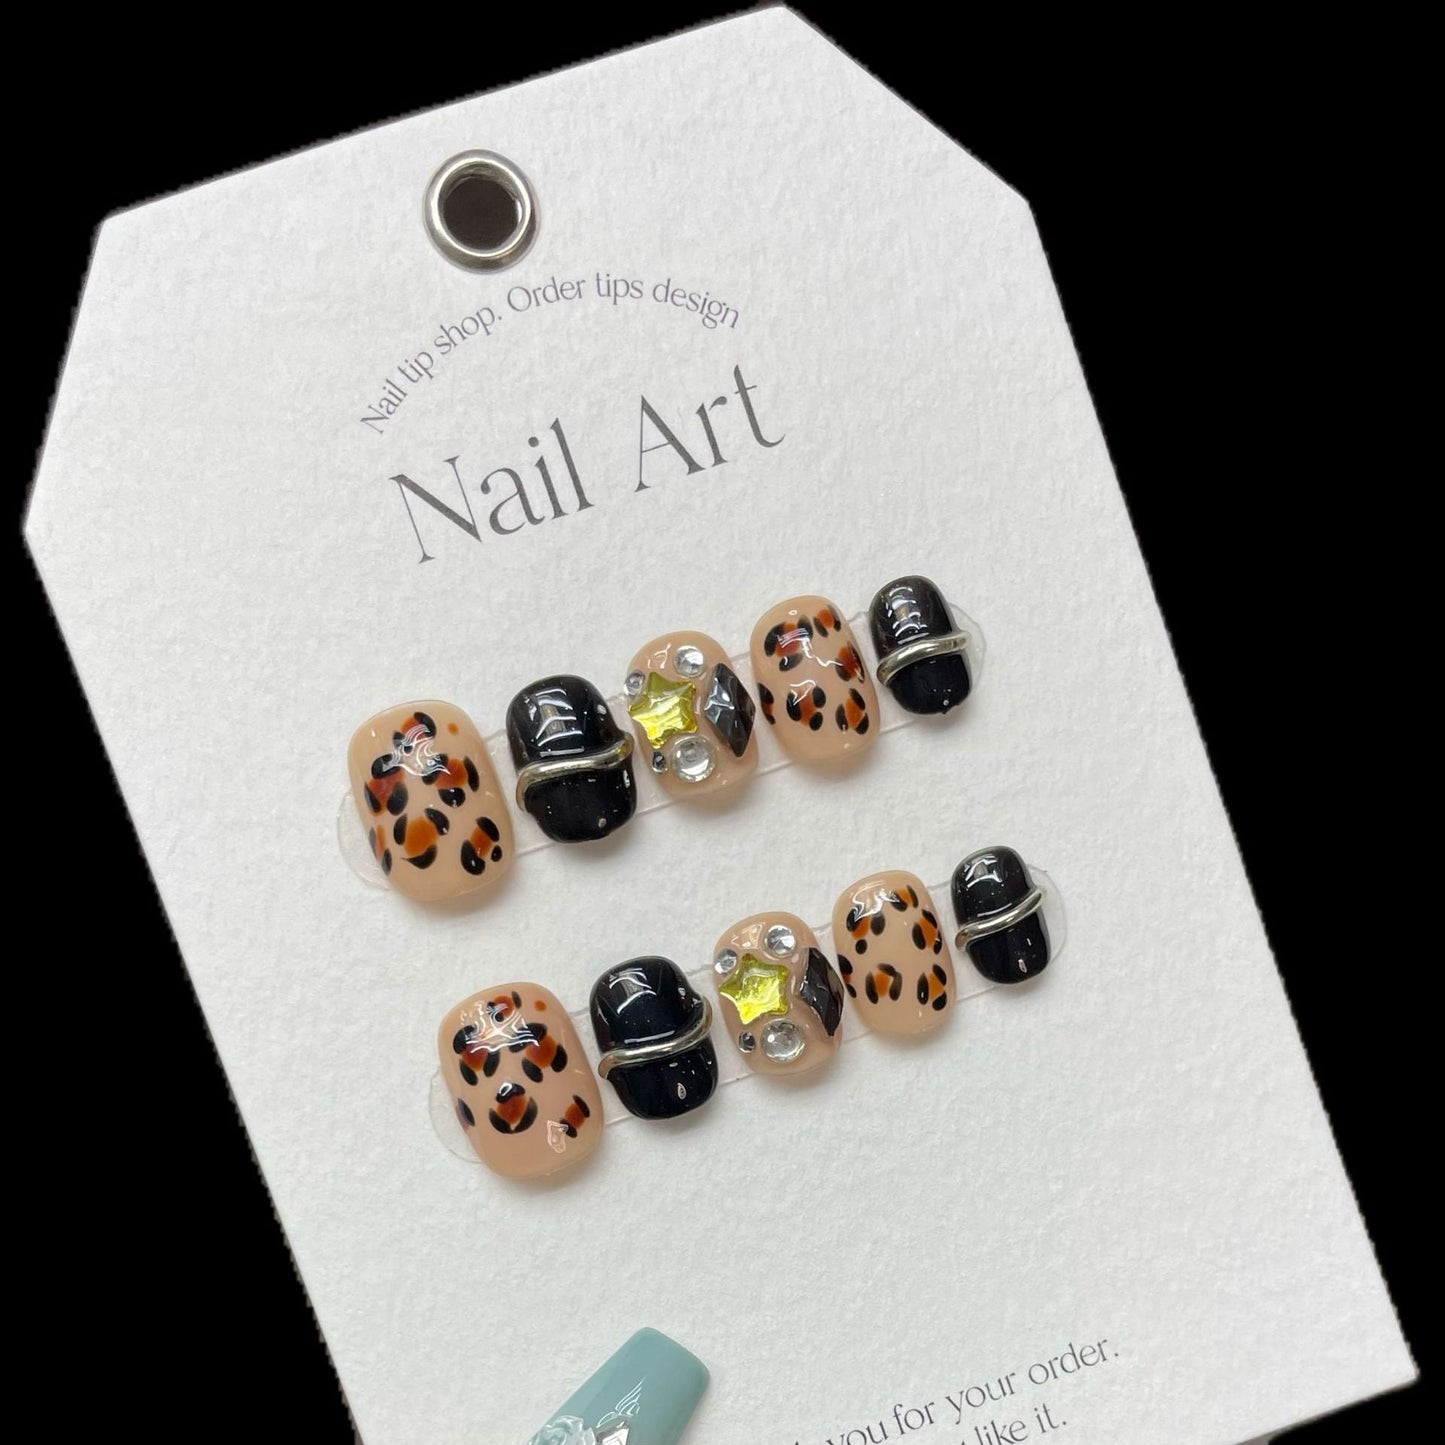 1079 Leopard style press on nails 100% handmade false nails black nude color